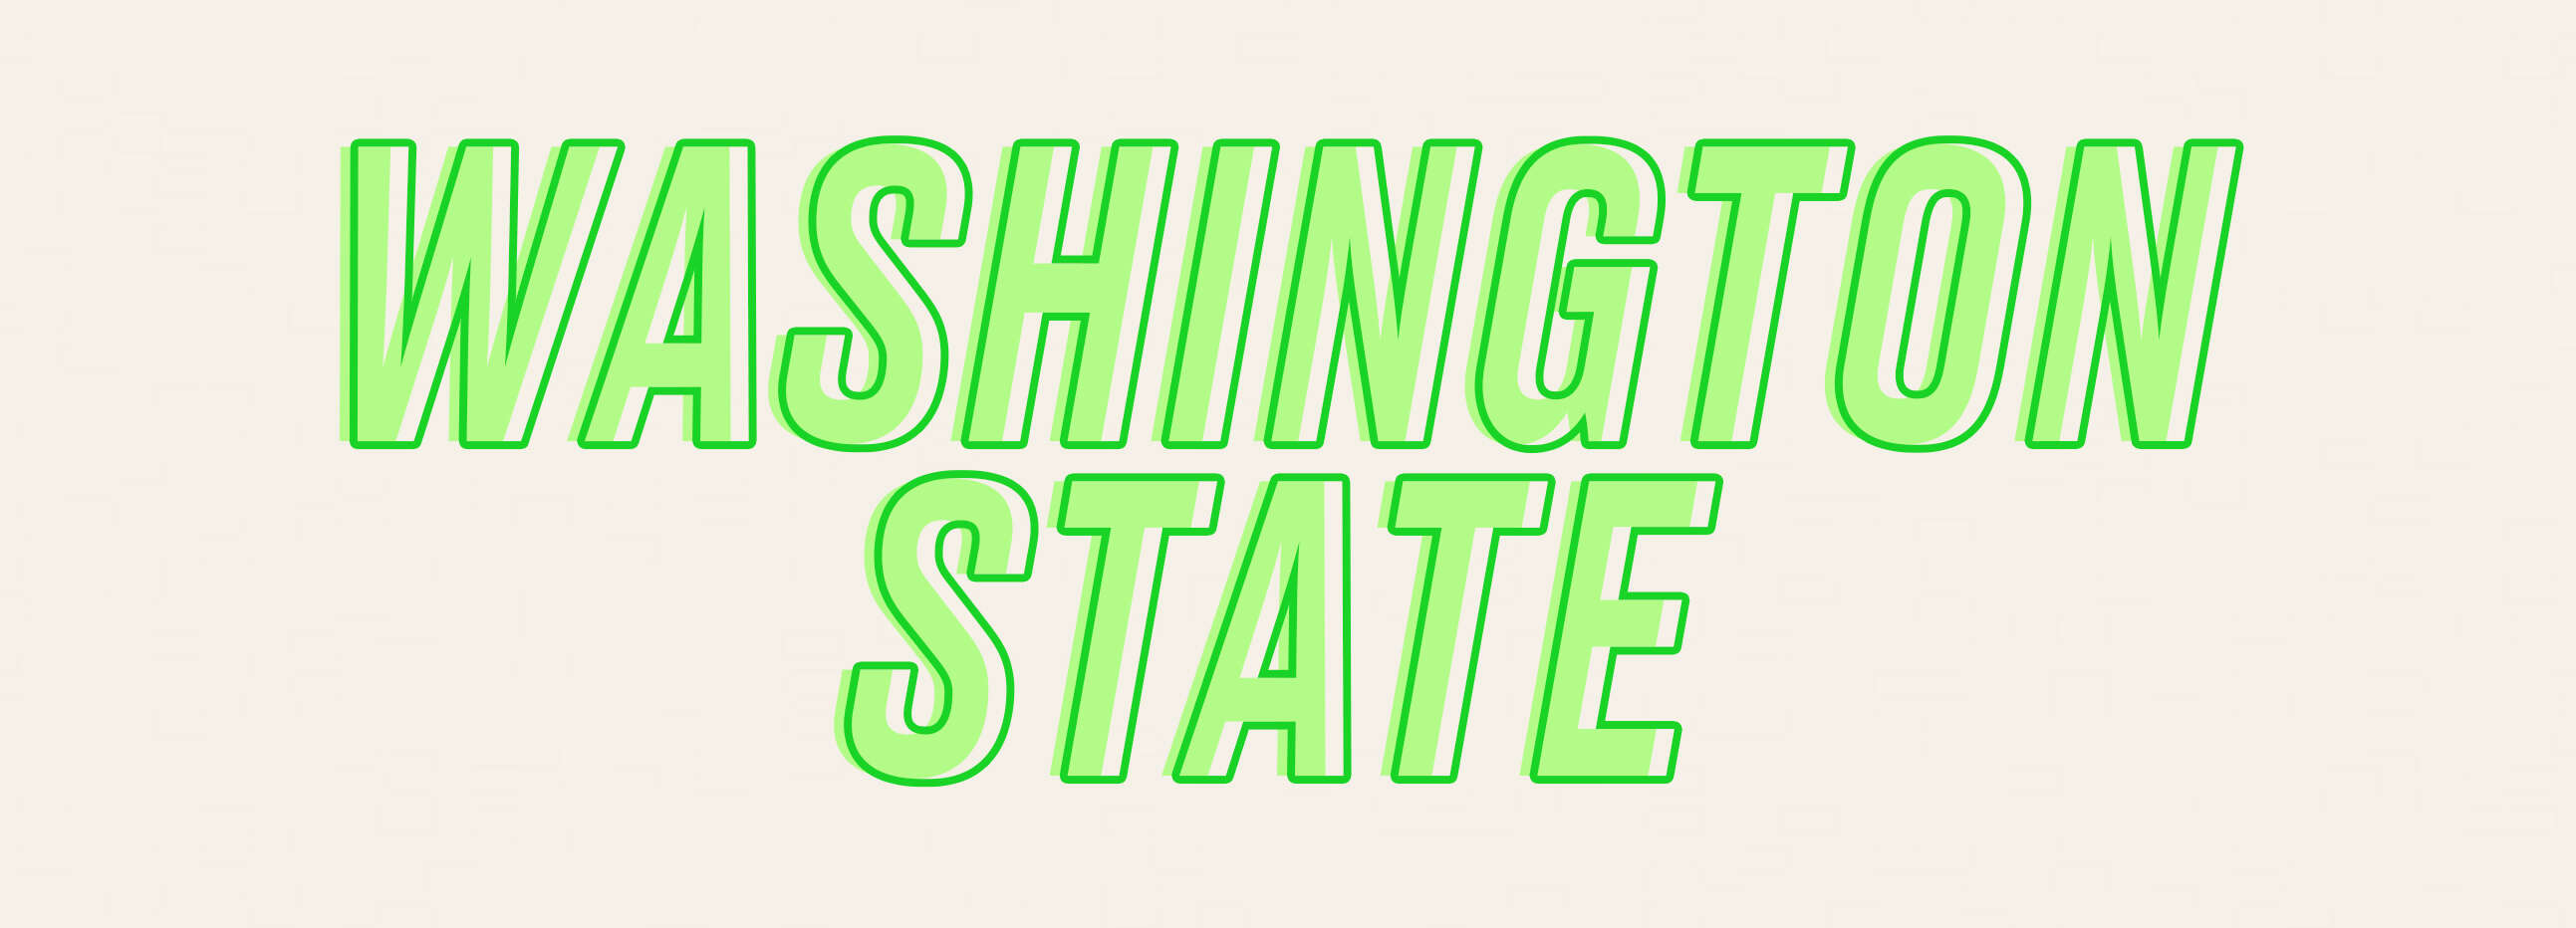 washington-state